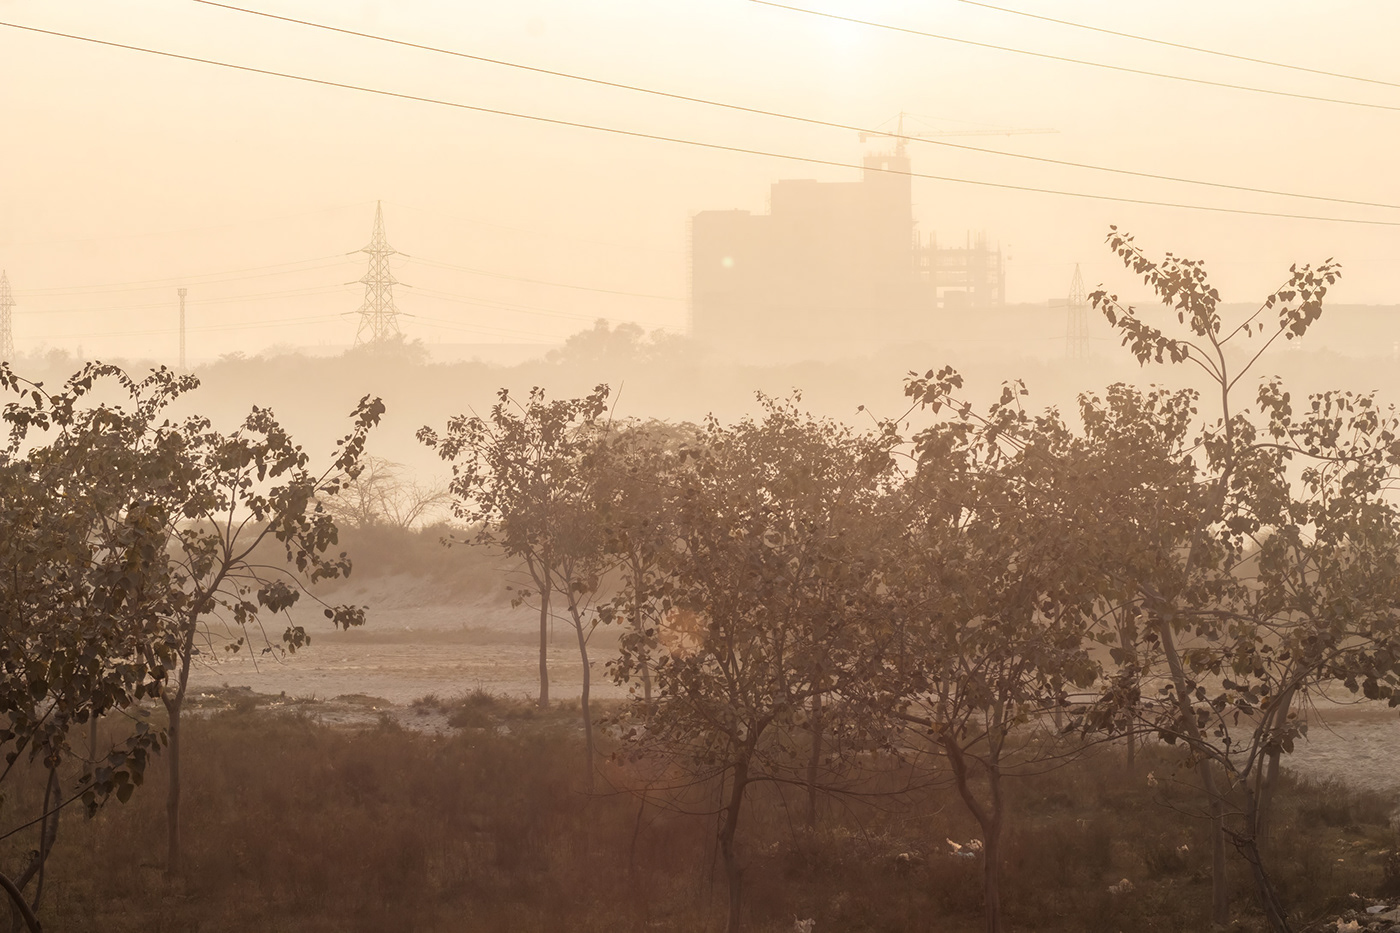 Outdoor Nature river environment Landscape sunset Delhi India Canon editorial